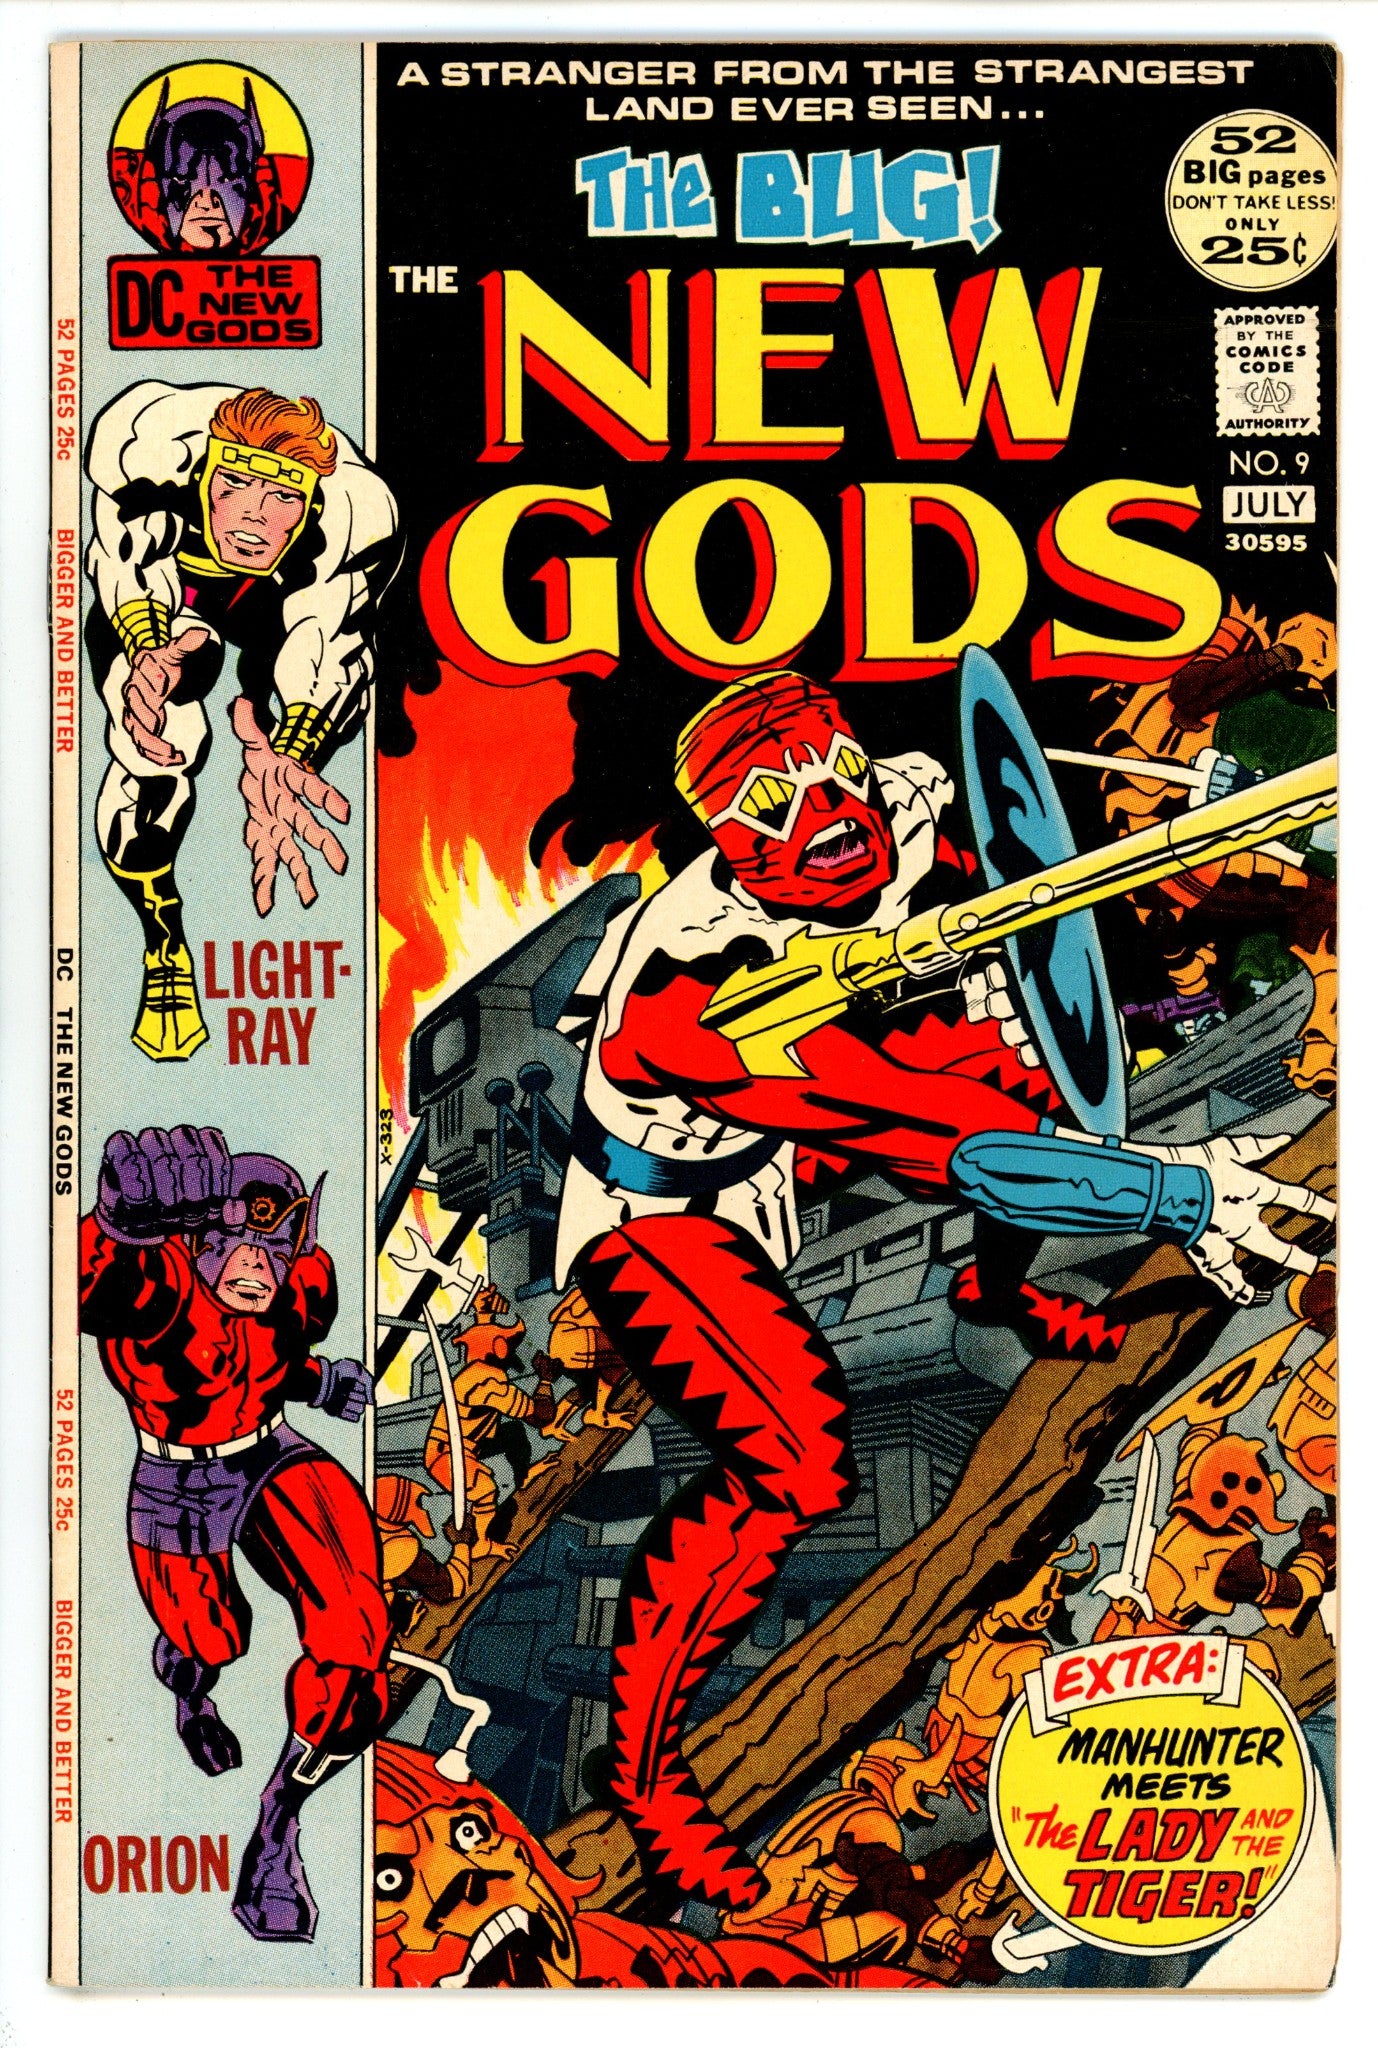 The New Gods Vol 1 9 FN/VF (7.0) (1972) 